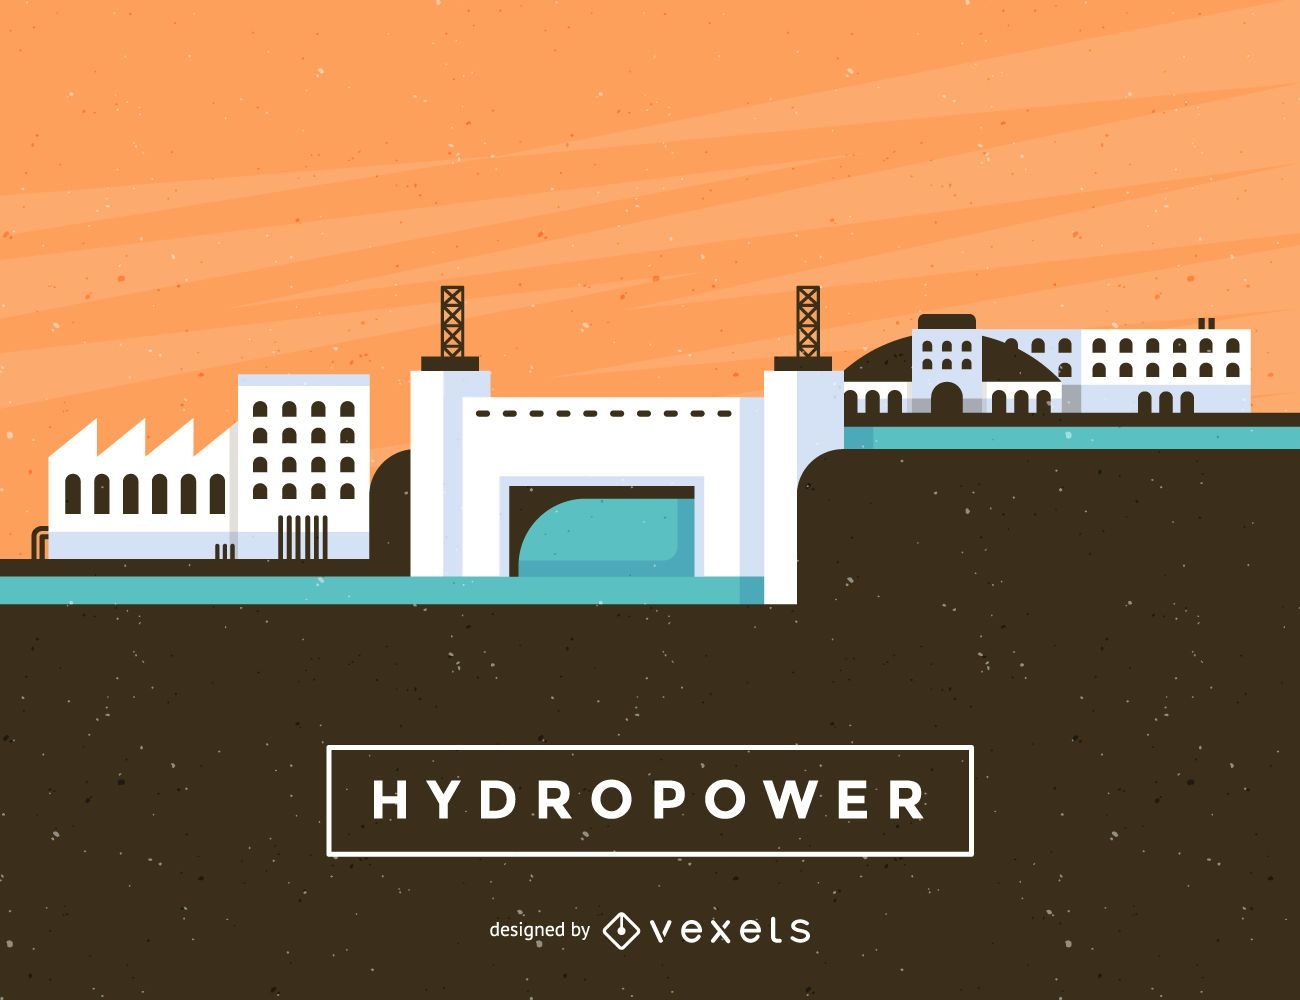 Hydropower plant illustration